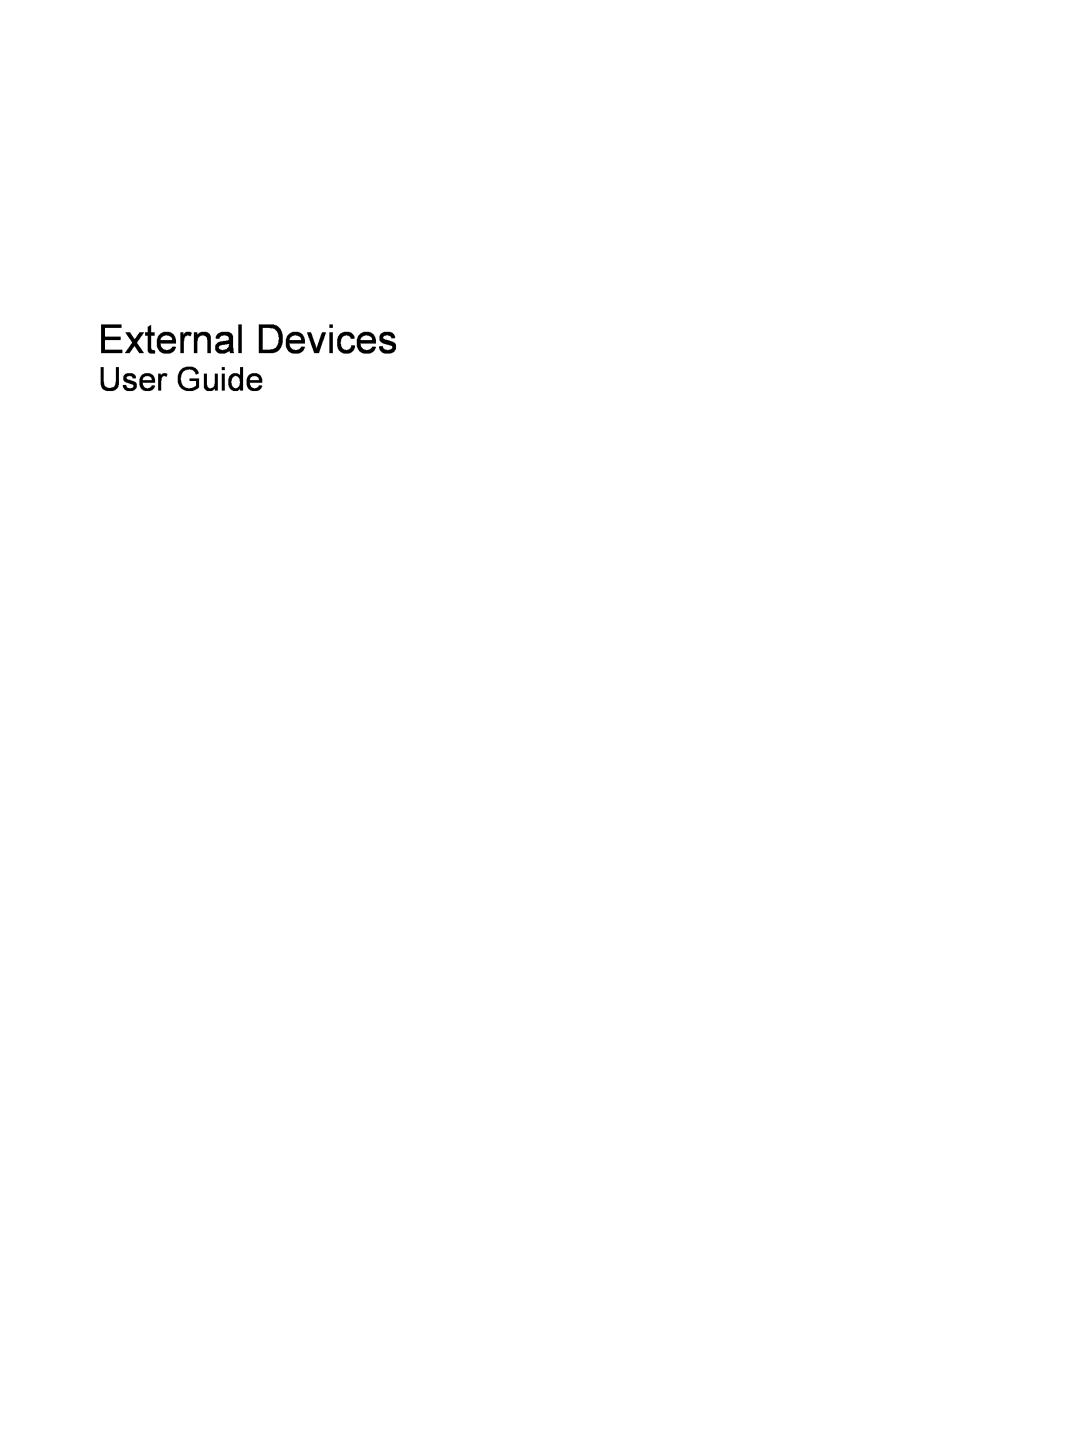 HP CQ41-205AX, CQ41-206AU manual Compaq Presario CQ41 Notebook PC, Maintenance and Service Guide, Document Part Number 